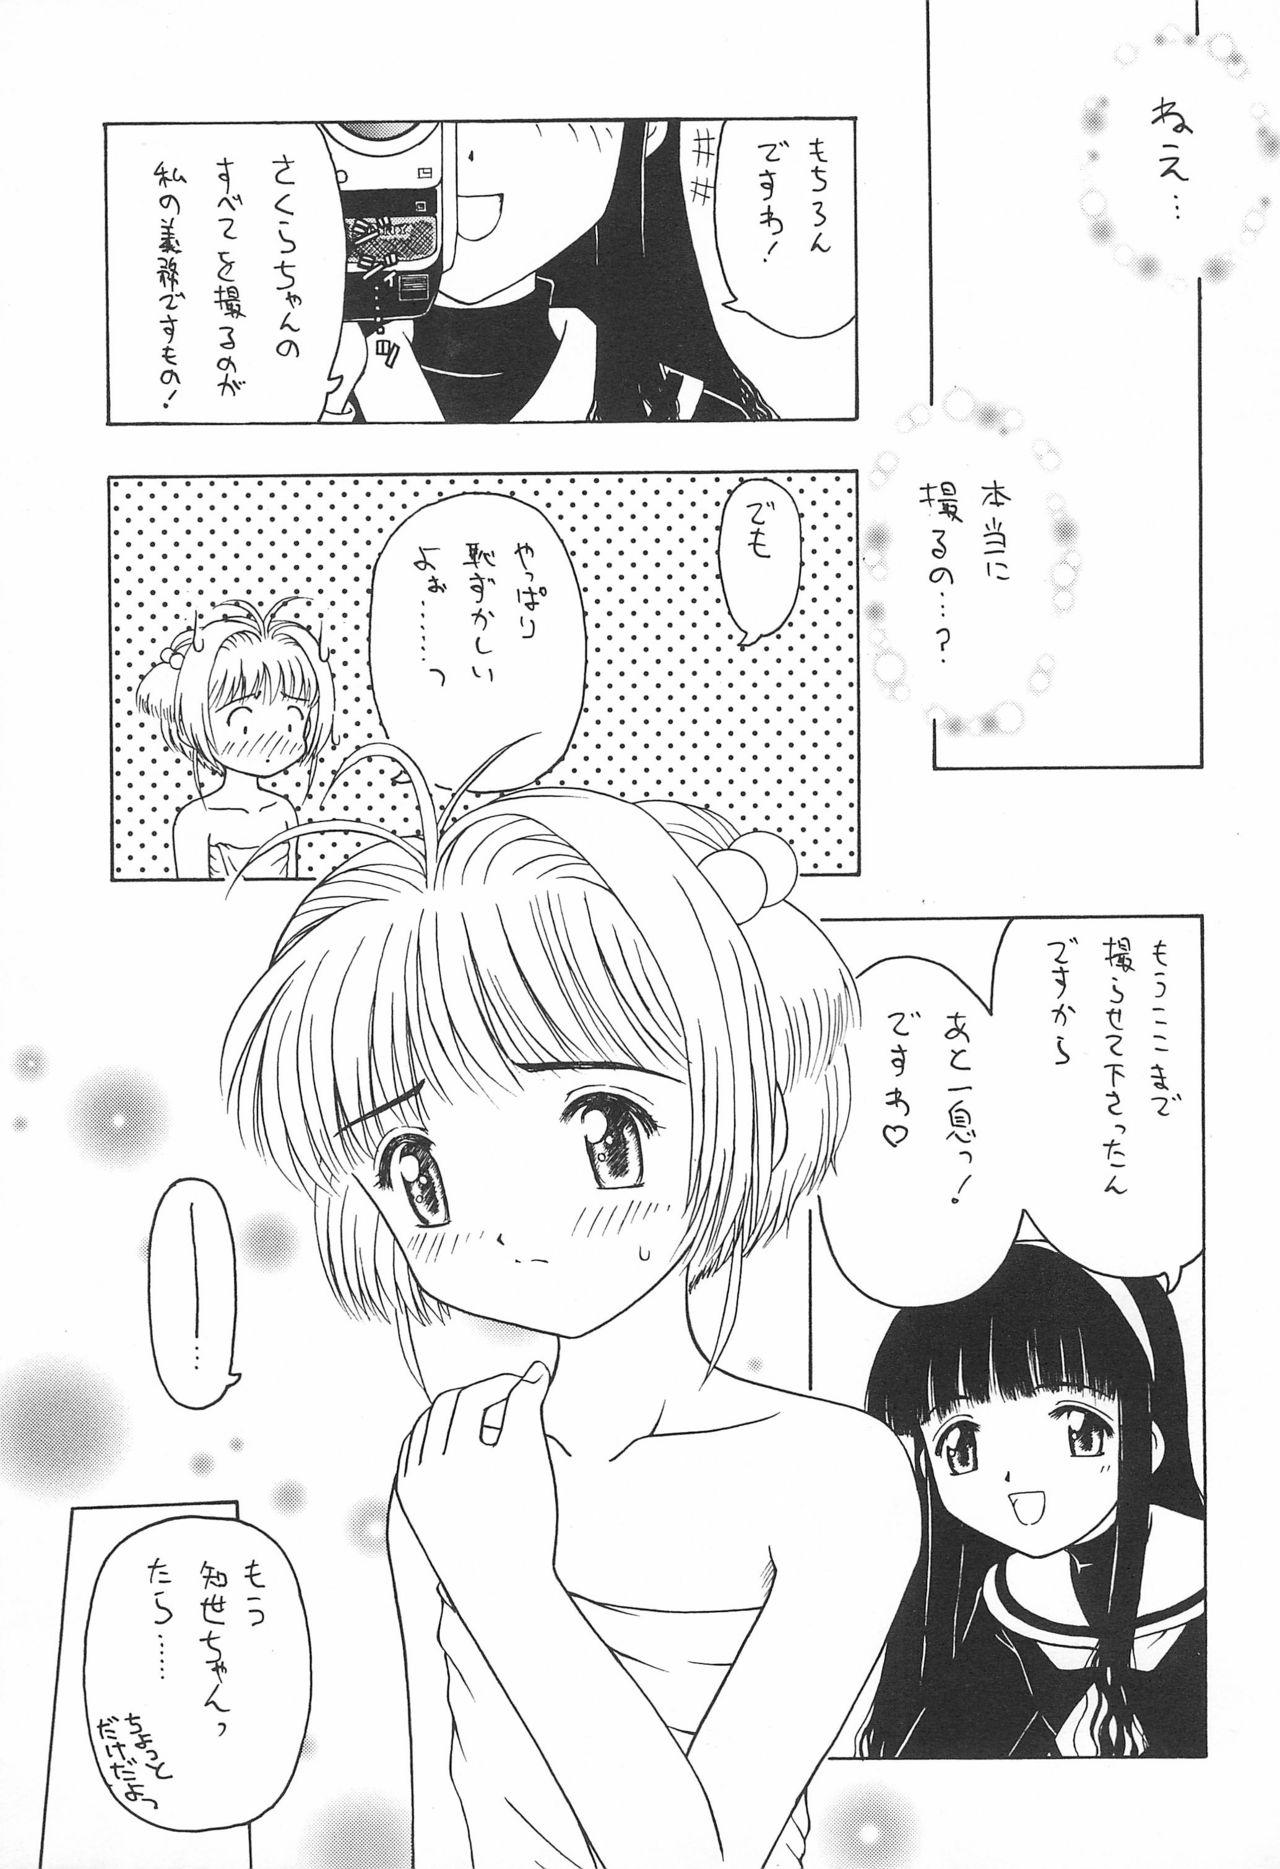 Masturbating Sakura to Tomoyo INTERCOURSE 1 - Cardcaptor sakura Pick Up - Page 5